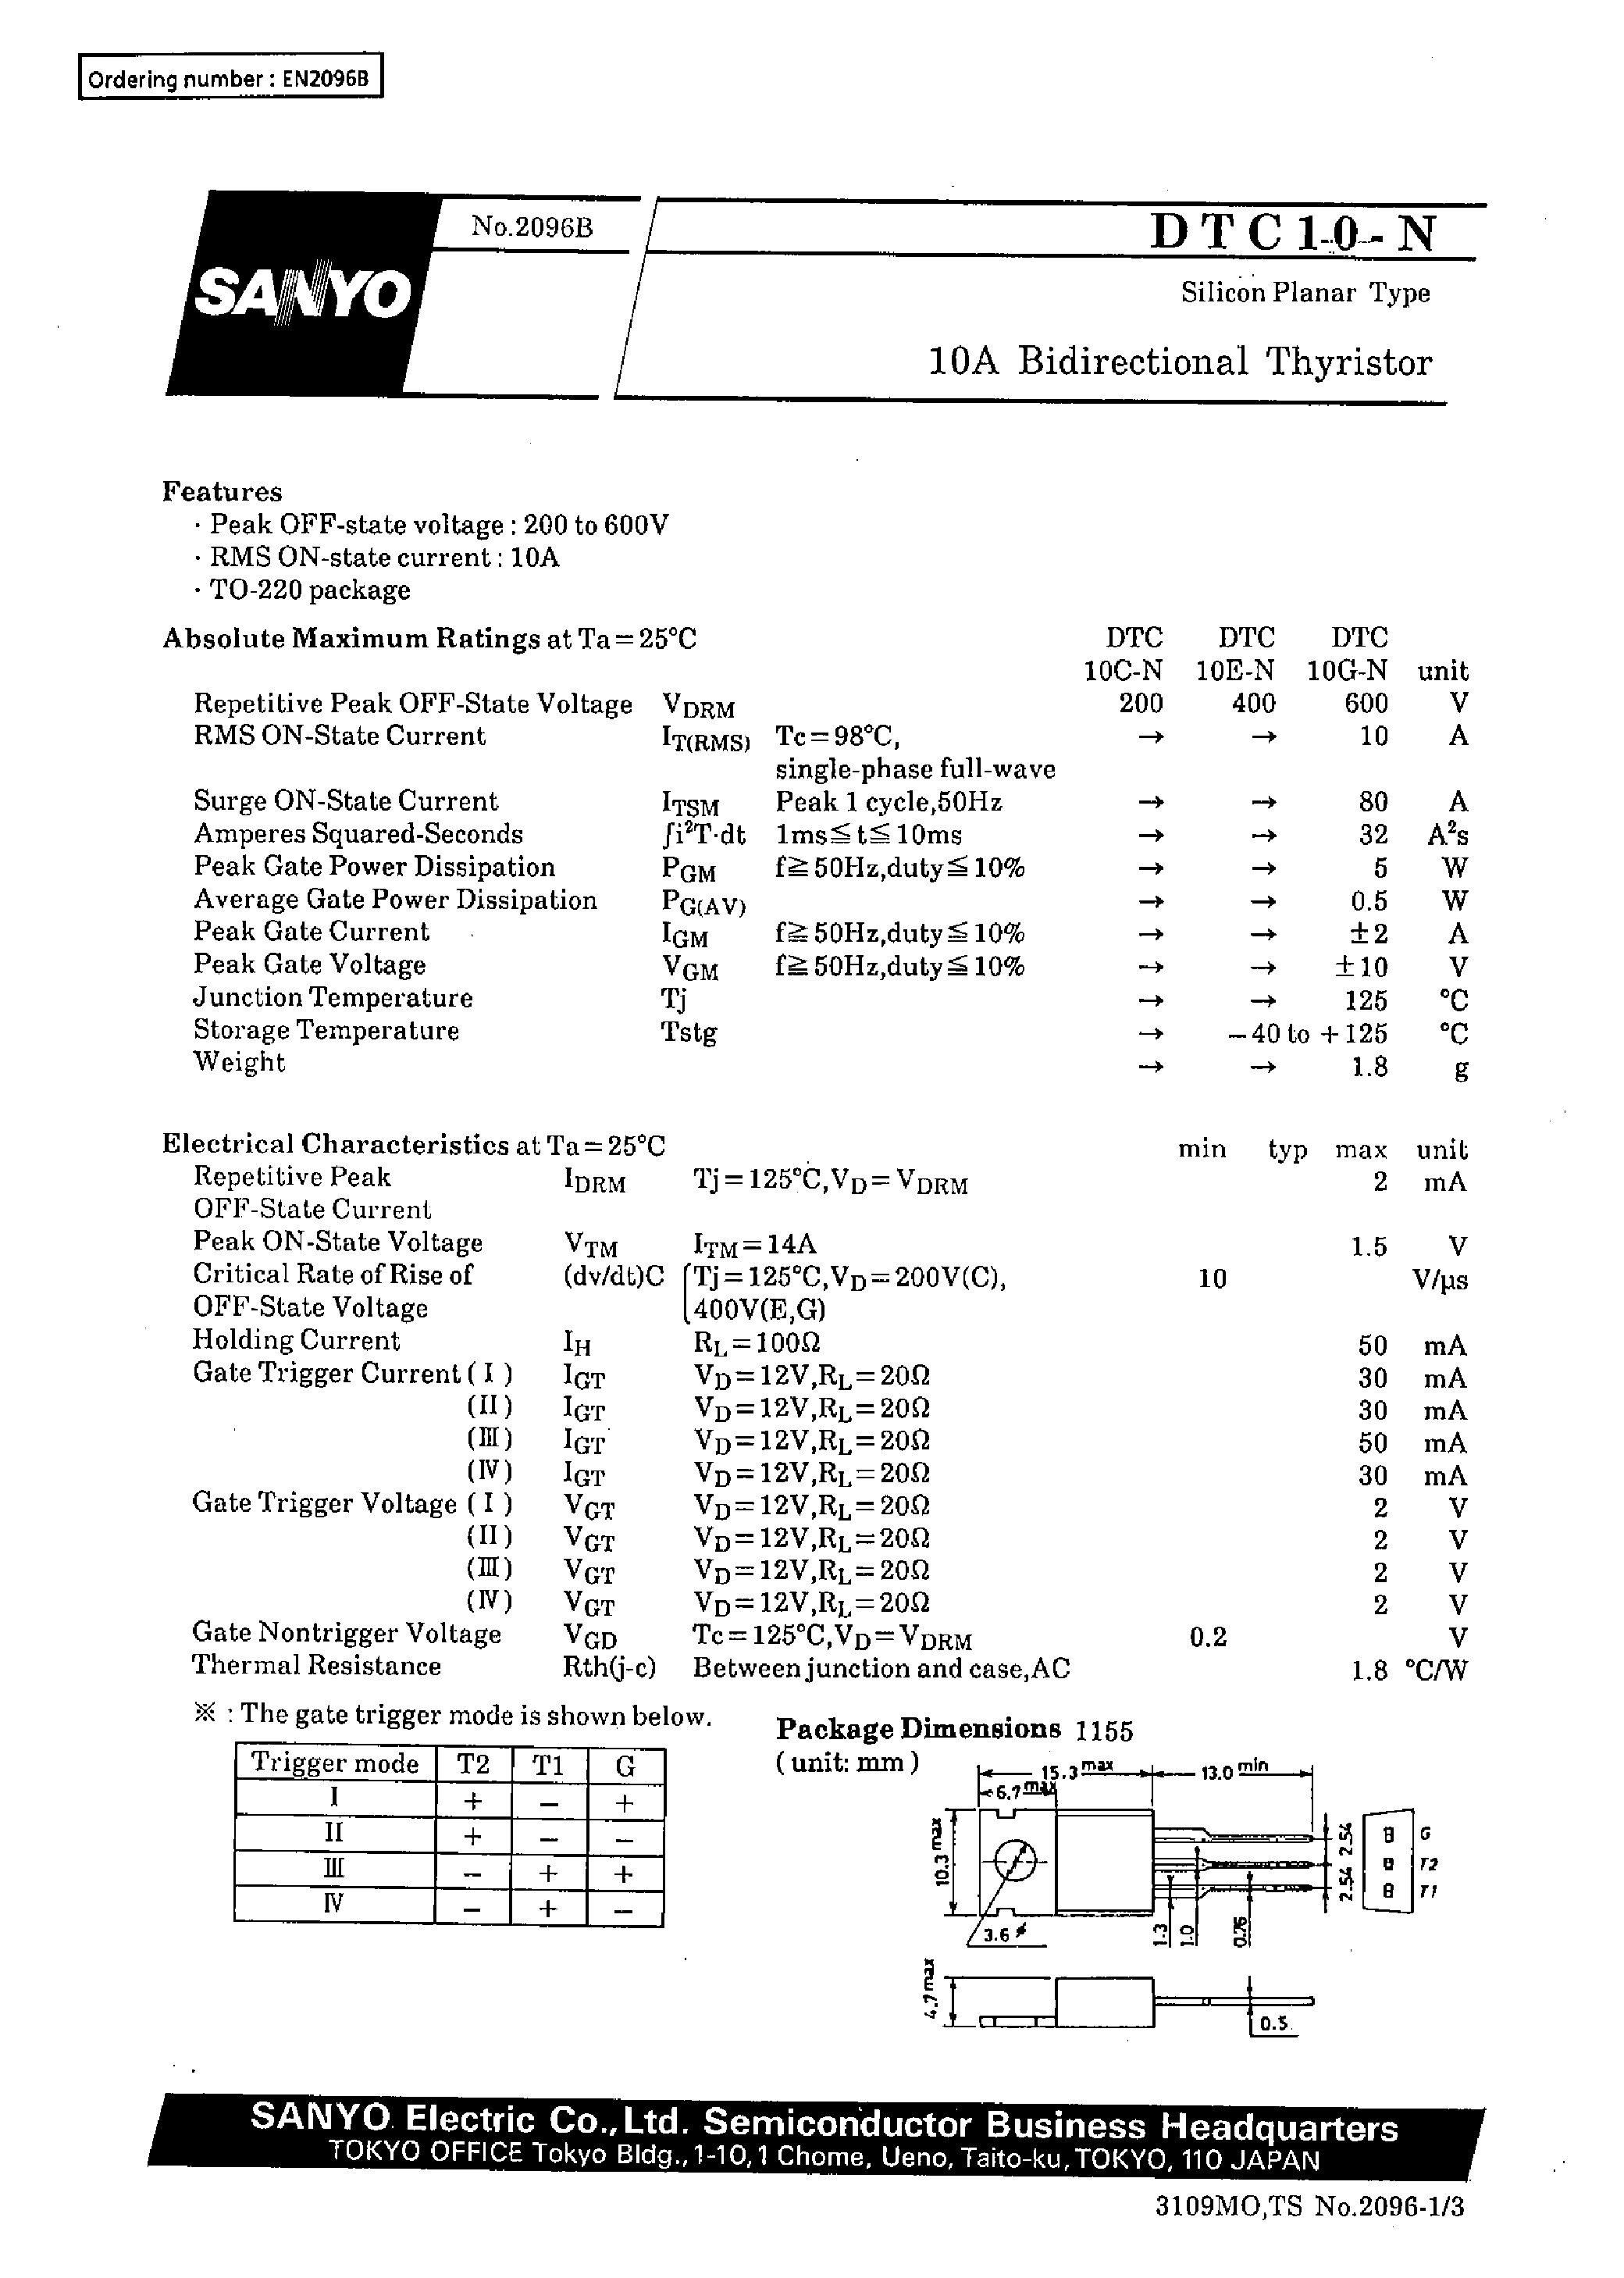 Datasheet DTC10-N - 10A Bidirectional Thyristor page 1